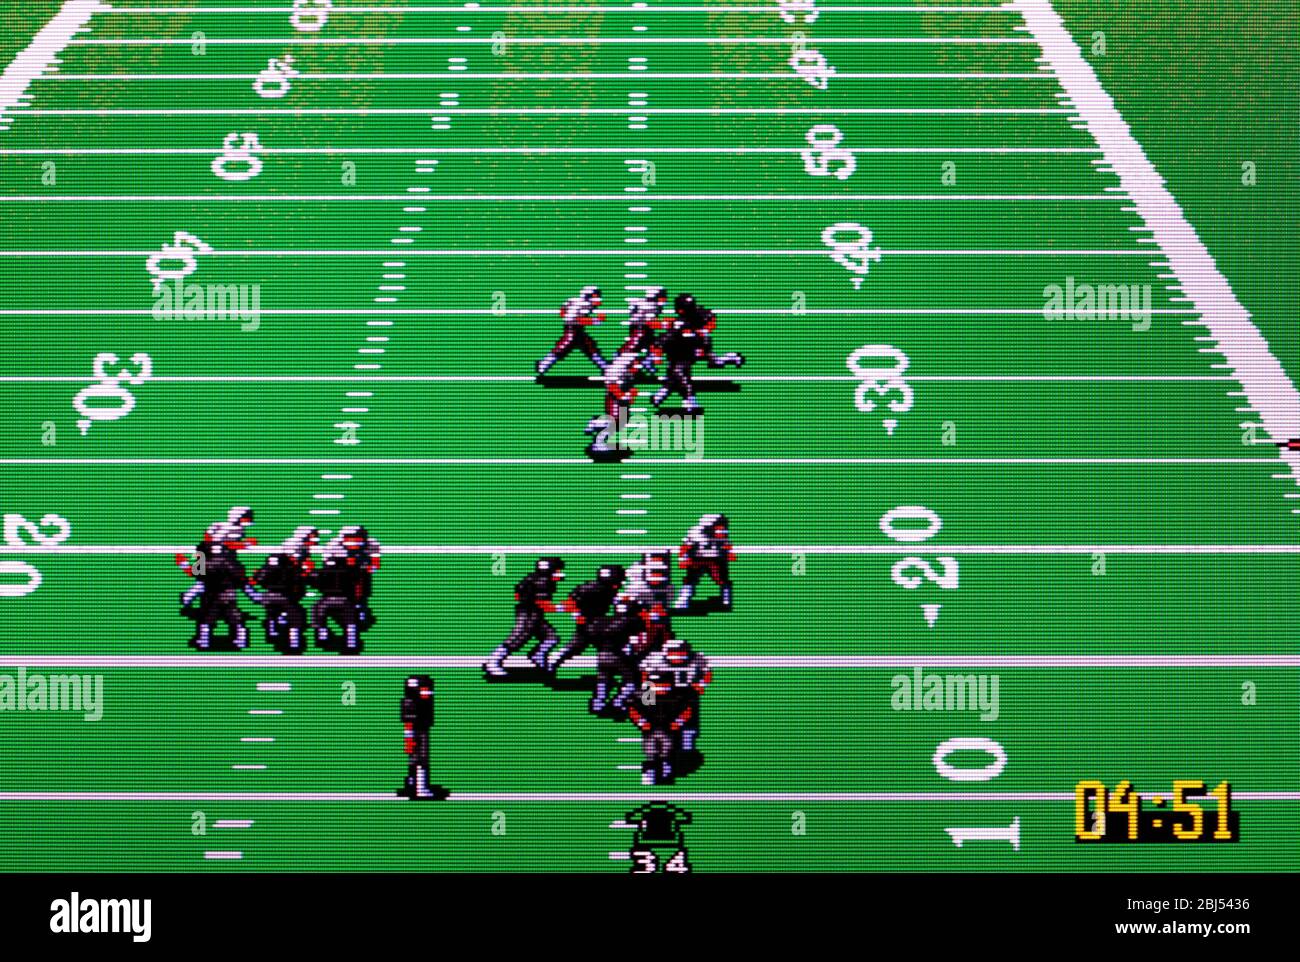 NFL Quarterback Club '96 - Sega Genesis Mega Drive - Editorial use only  Stock Photo - Alamy